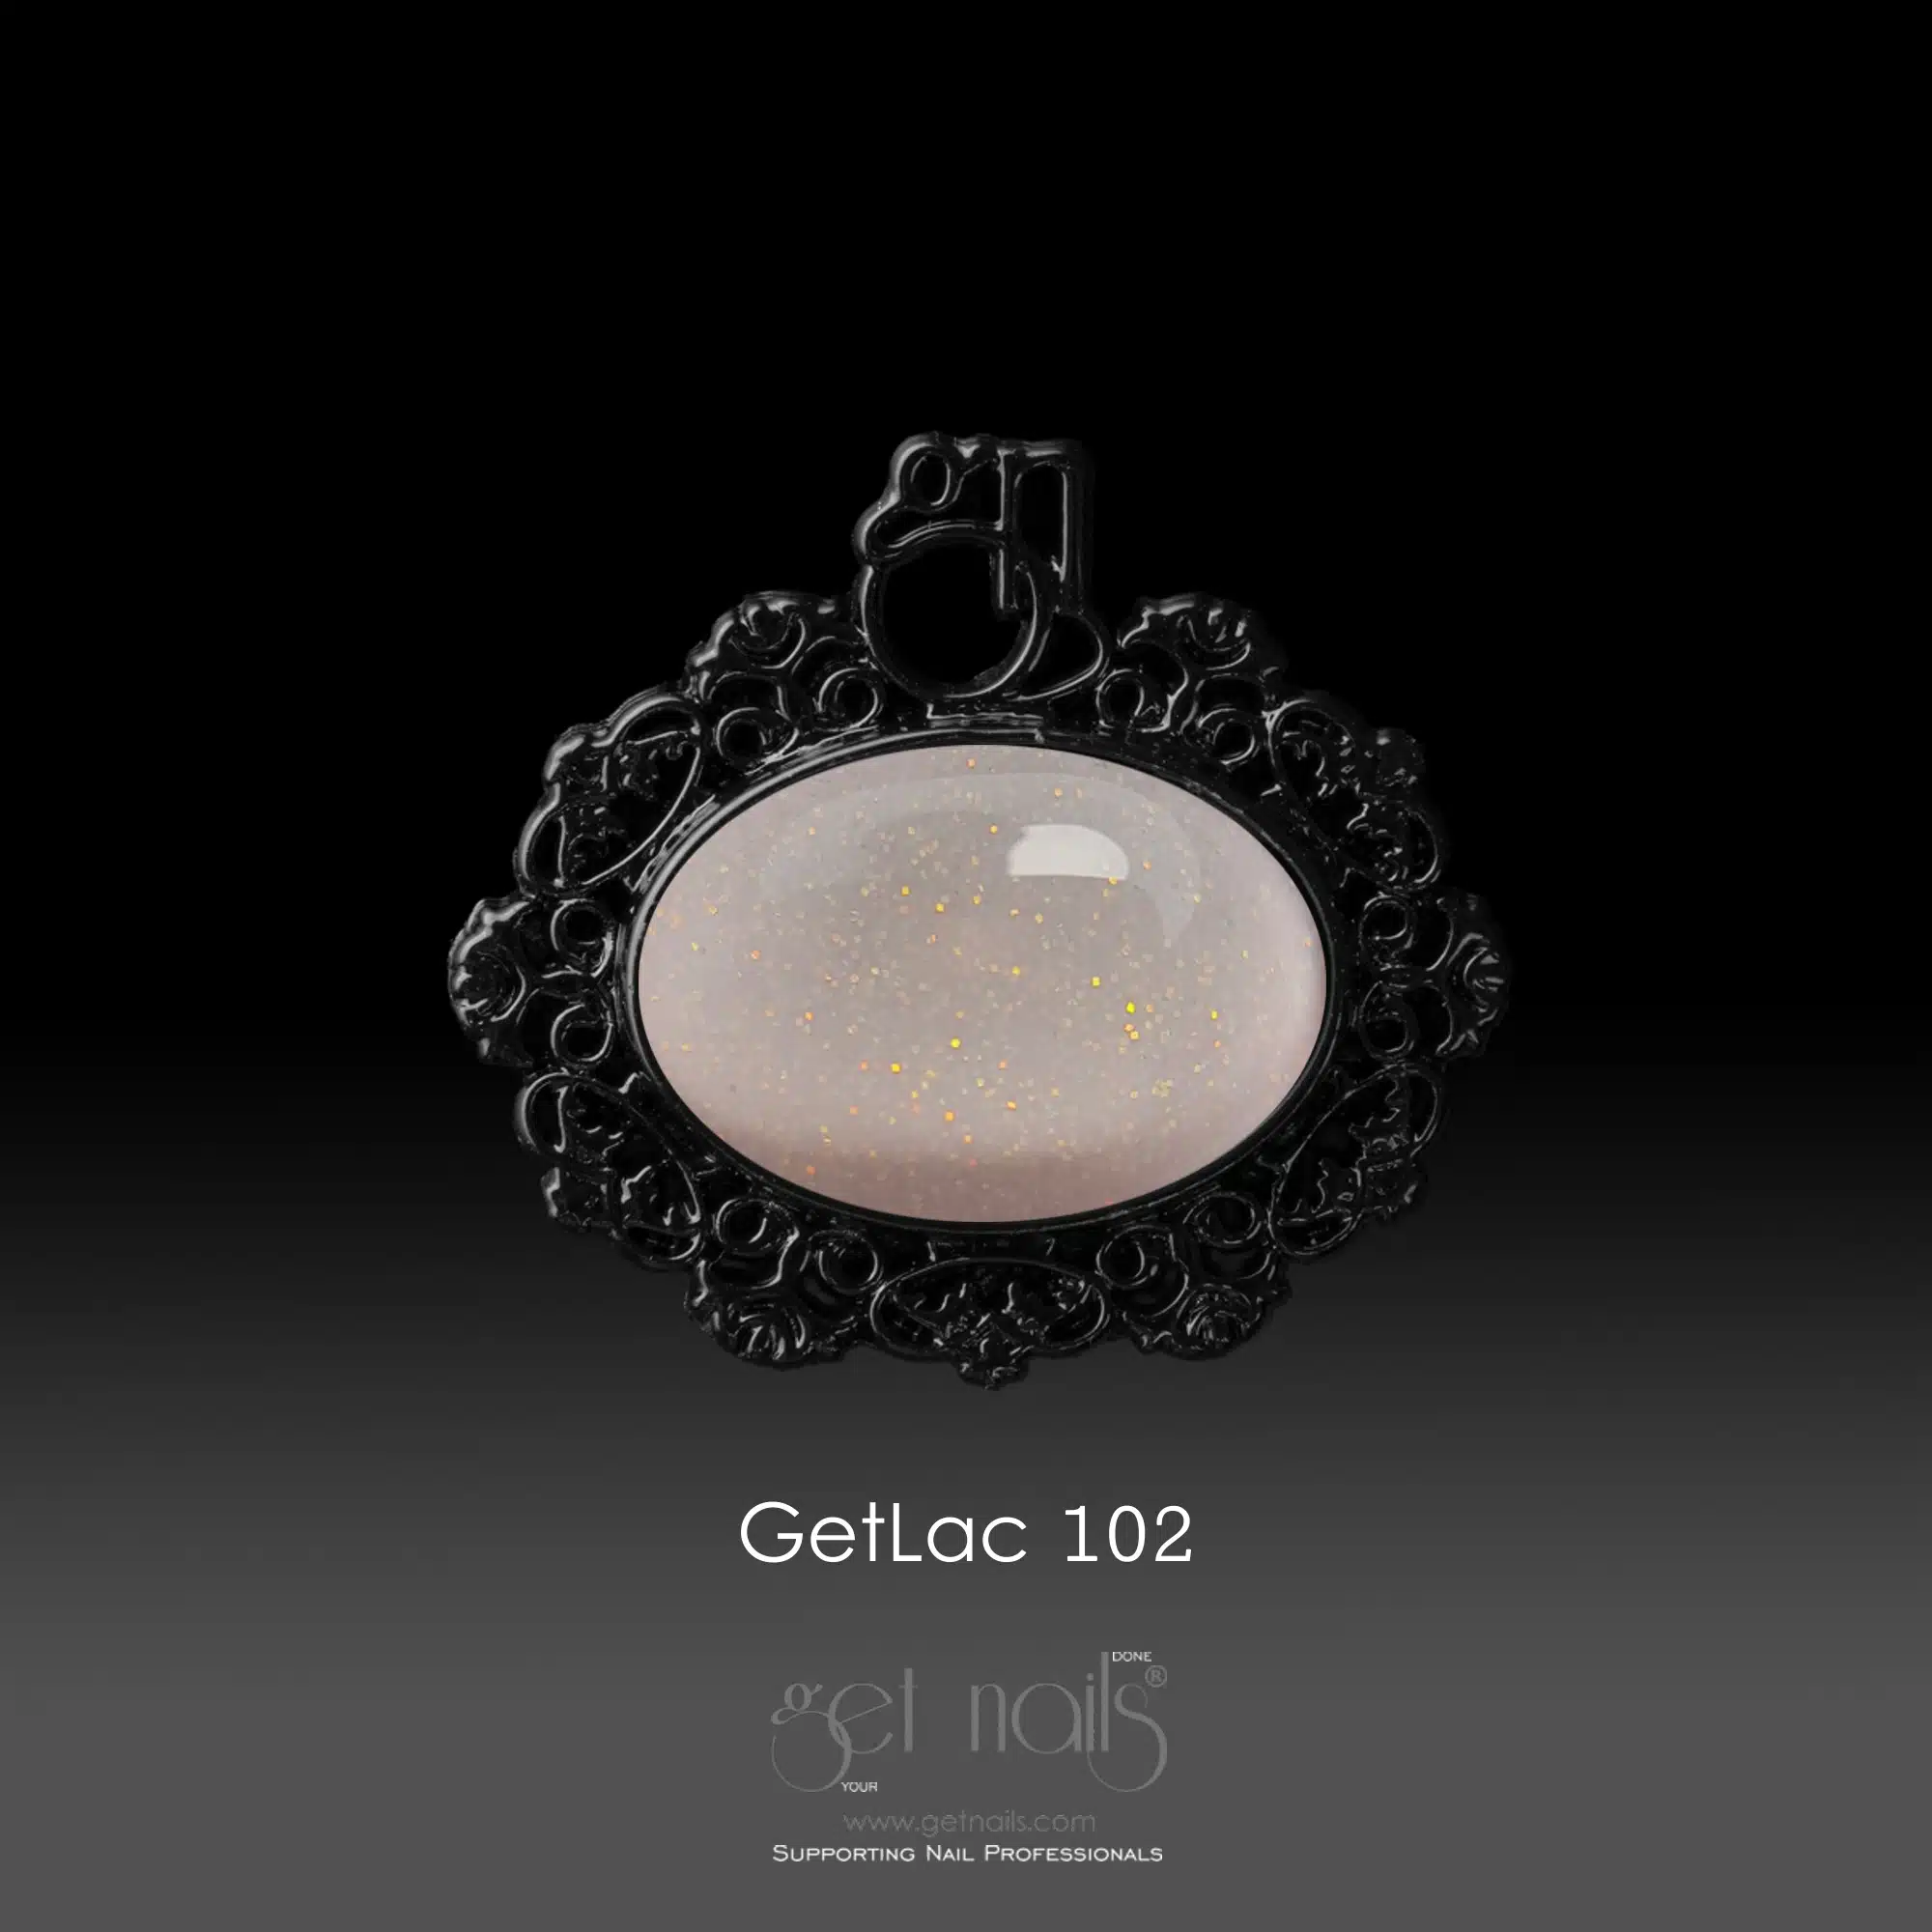 Ottieni Nails Austria - GetLac 102 15g